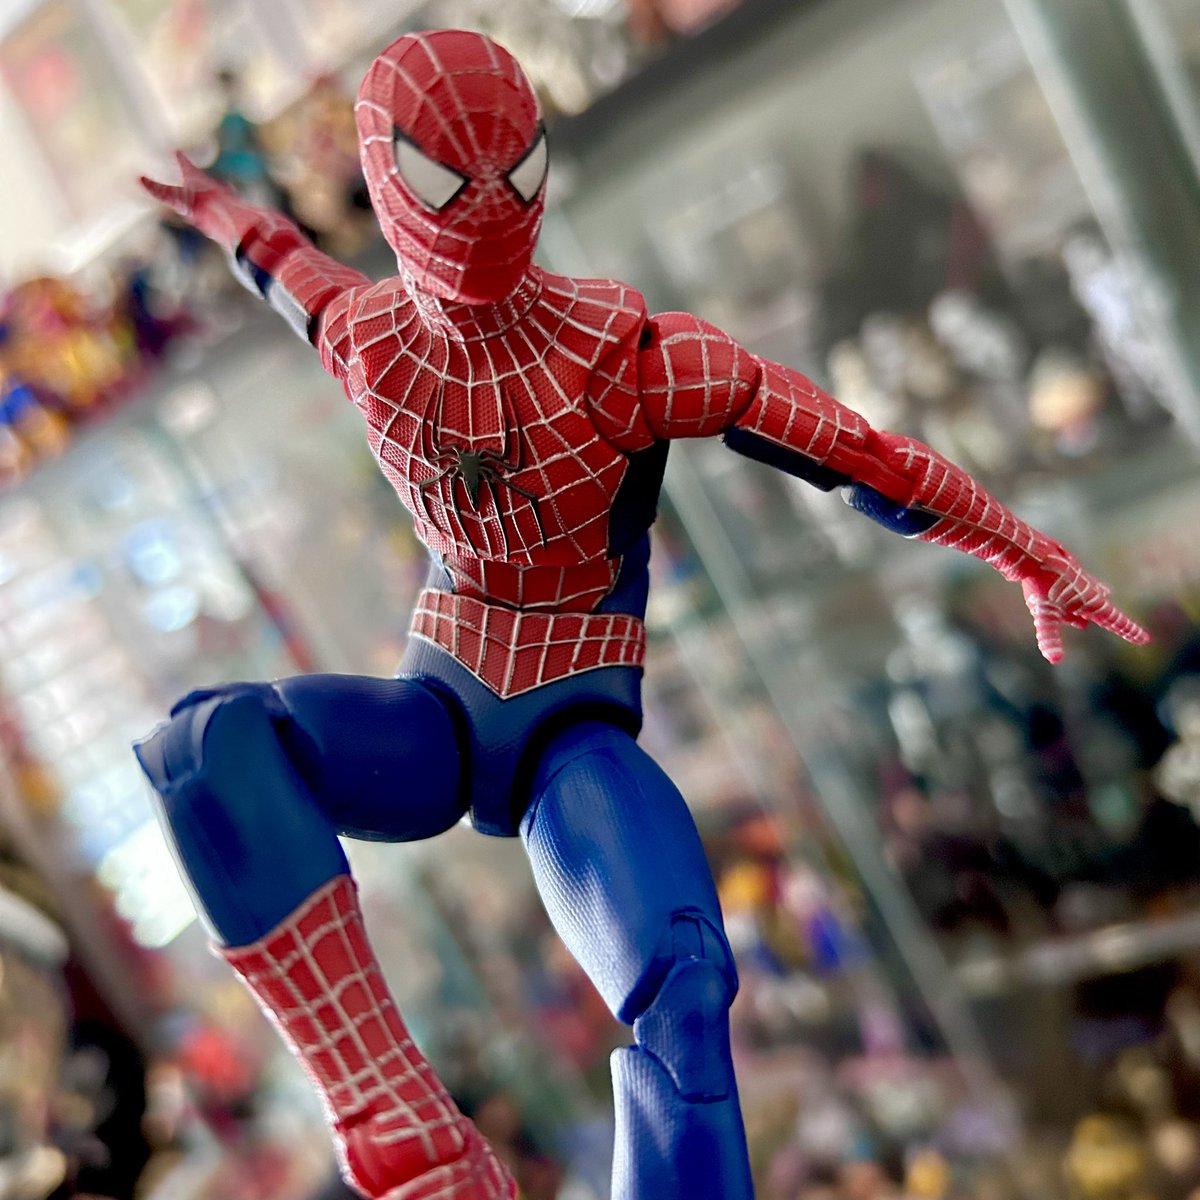 #Spidey 🕸️🕷️🕸️
#Spiderman #AmazingSpiderman